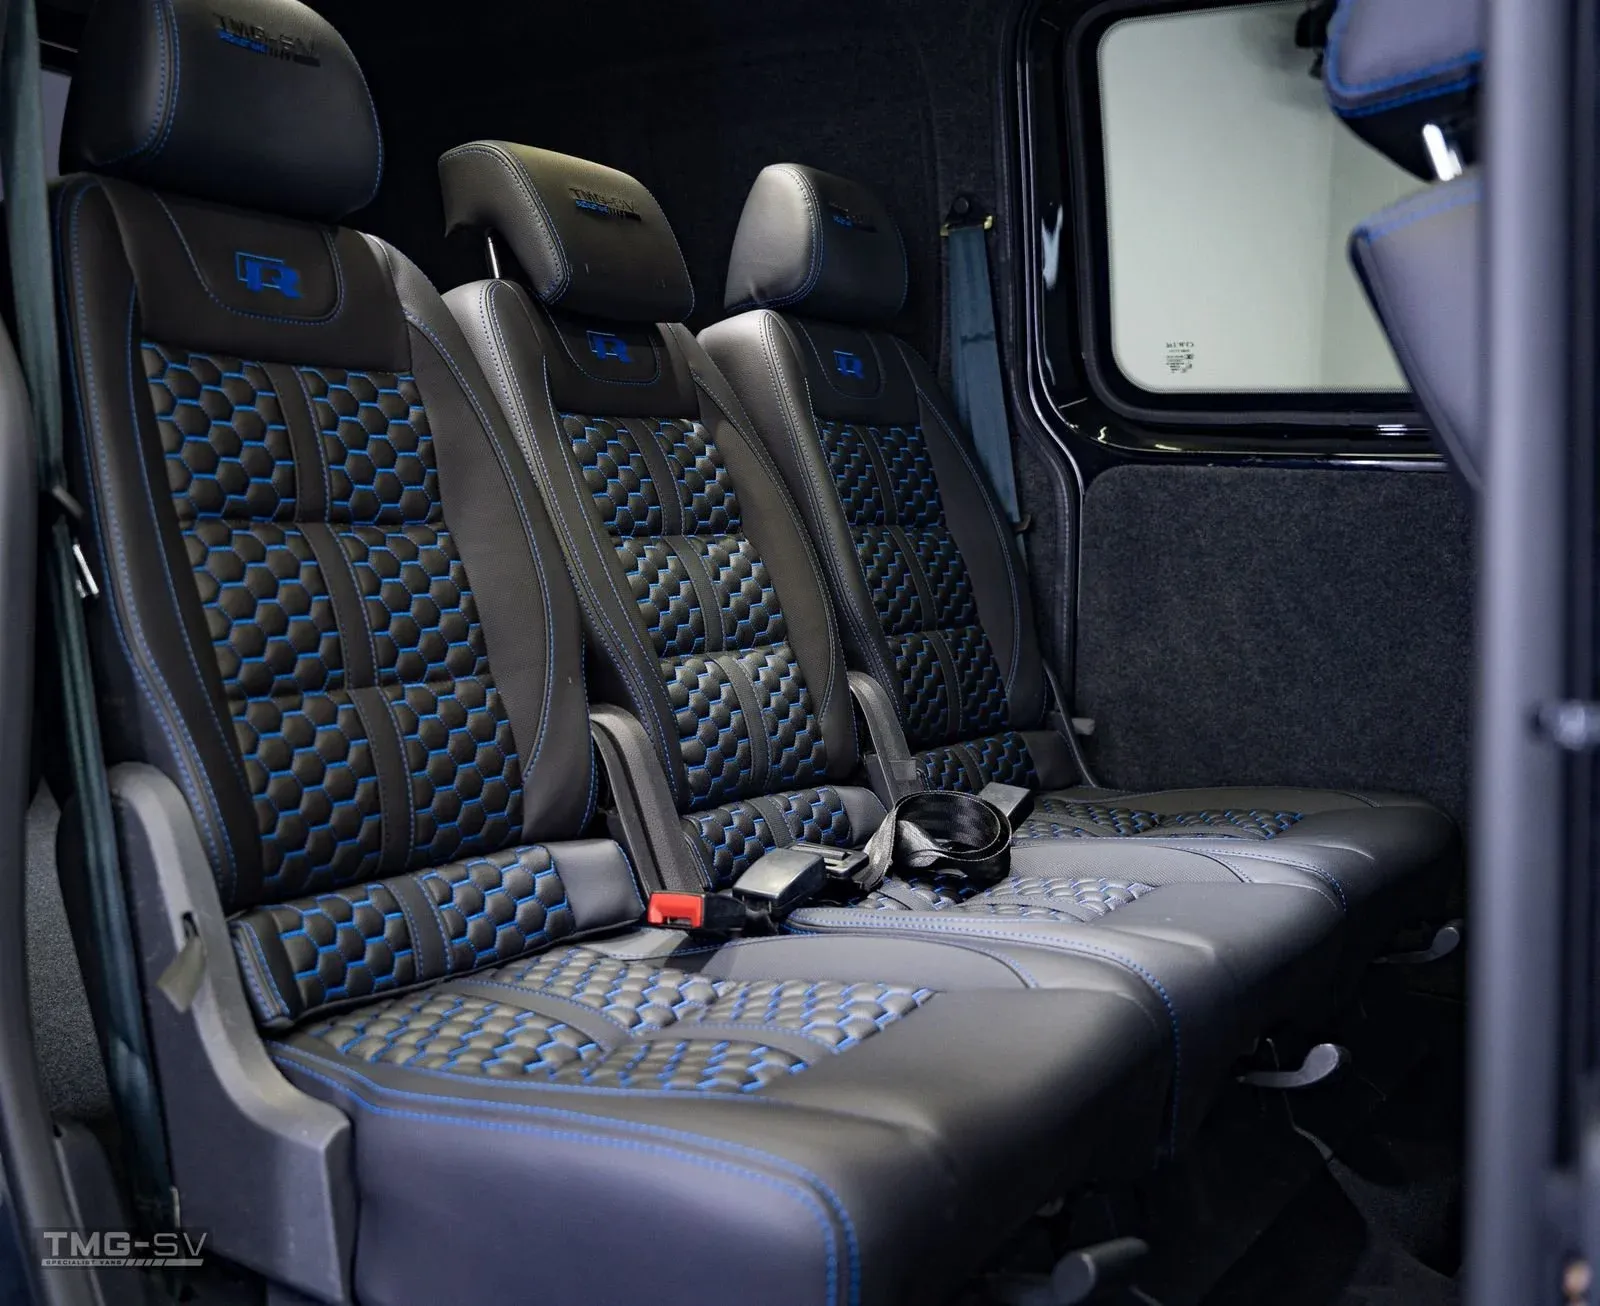  VW Caddy Rear Seat Conversions - OEM versus aftermarket